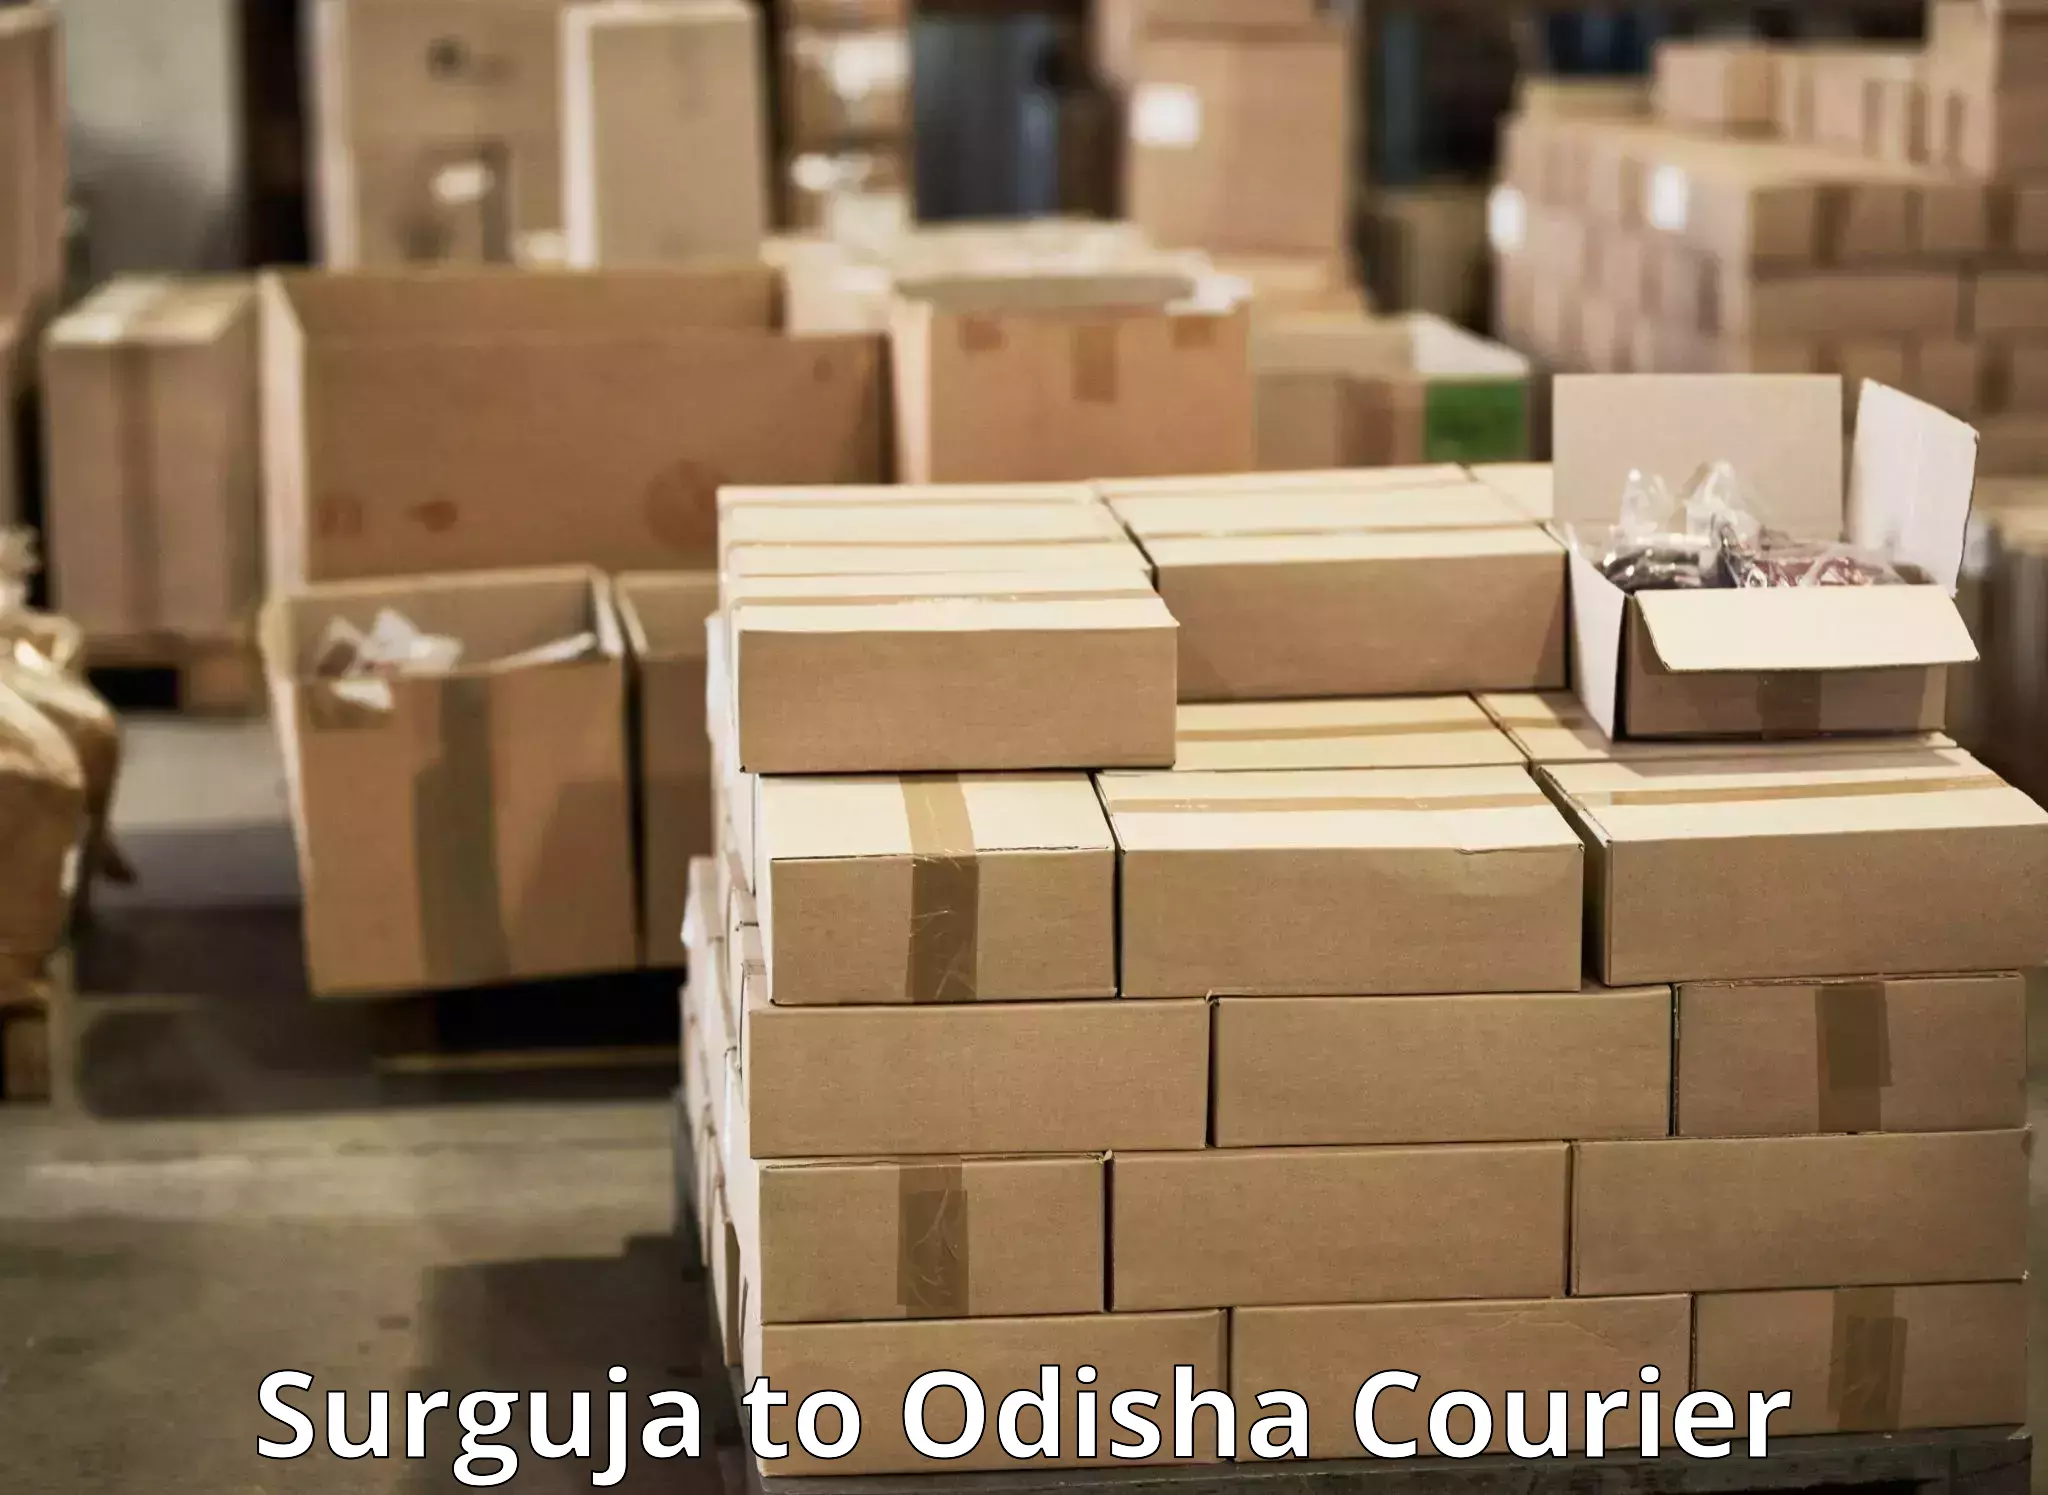 Express courier capabilities Surguja to Baripada